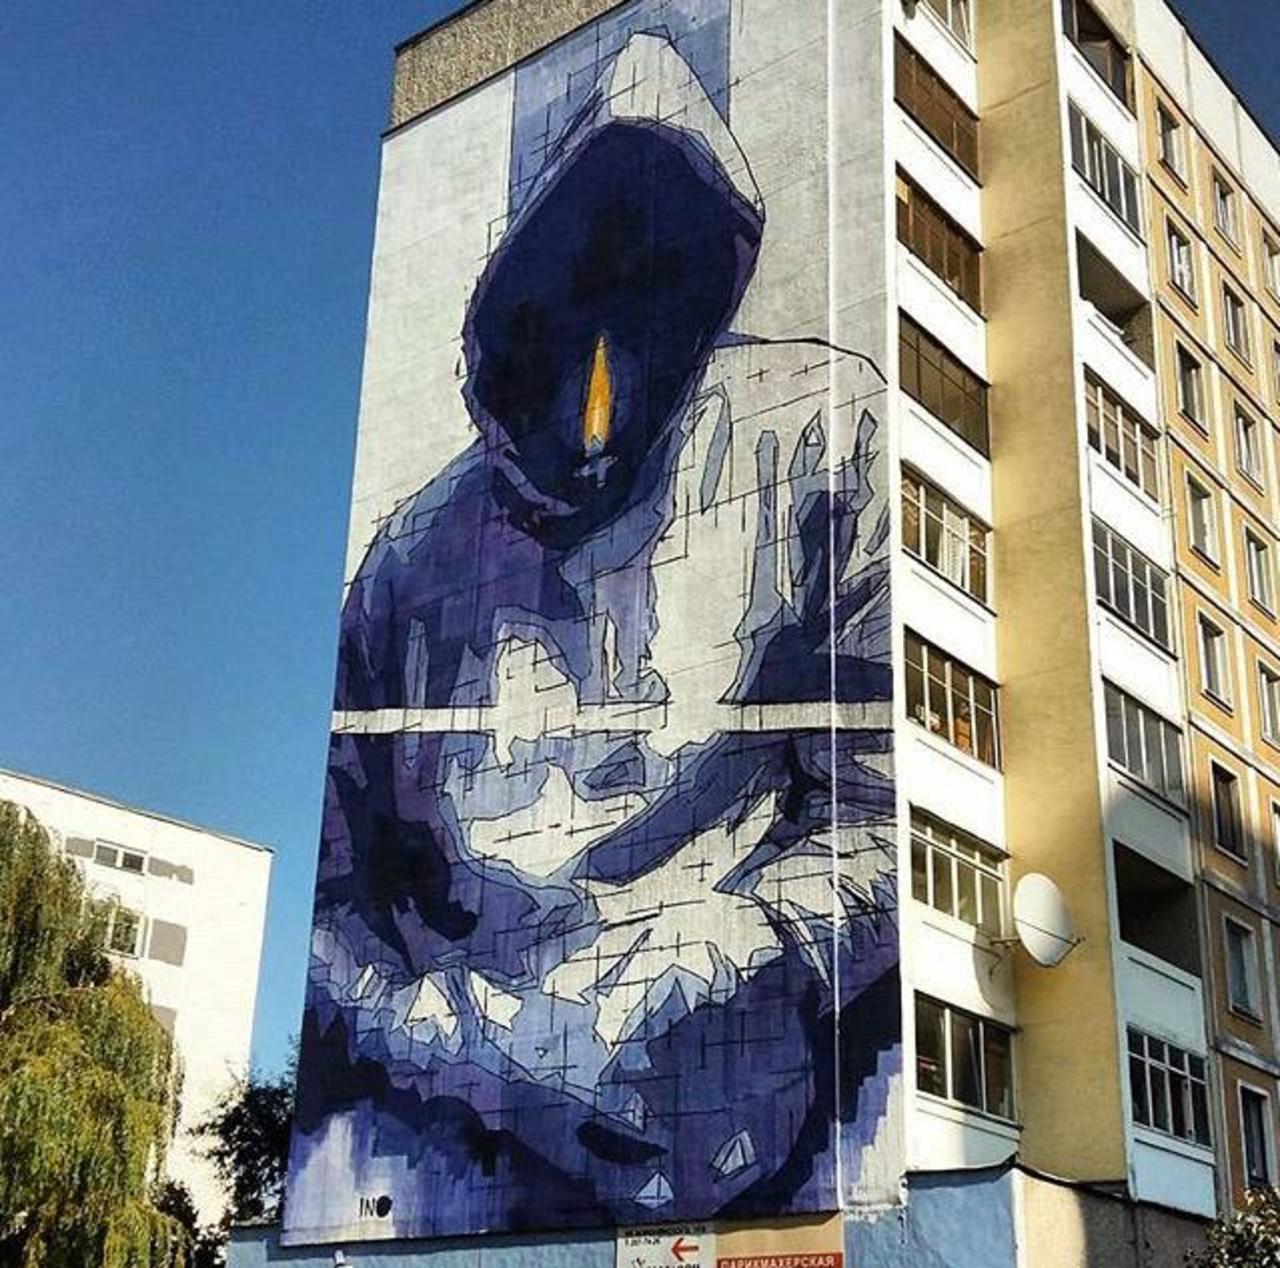 'Man With No Name' 
New Street Art by iNO in Minsk, Belarus 

#art #graffiti #mural #streetart http://t.co/8jkW4zGf3F